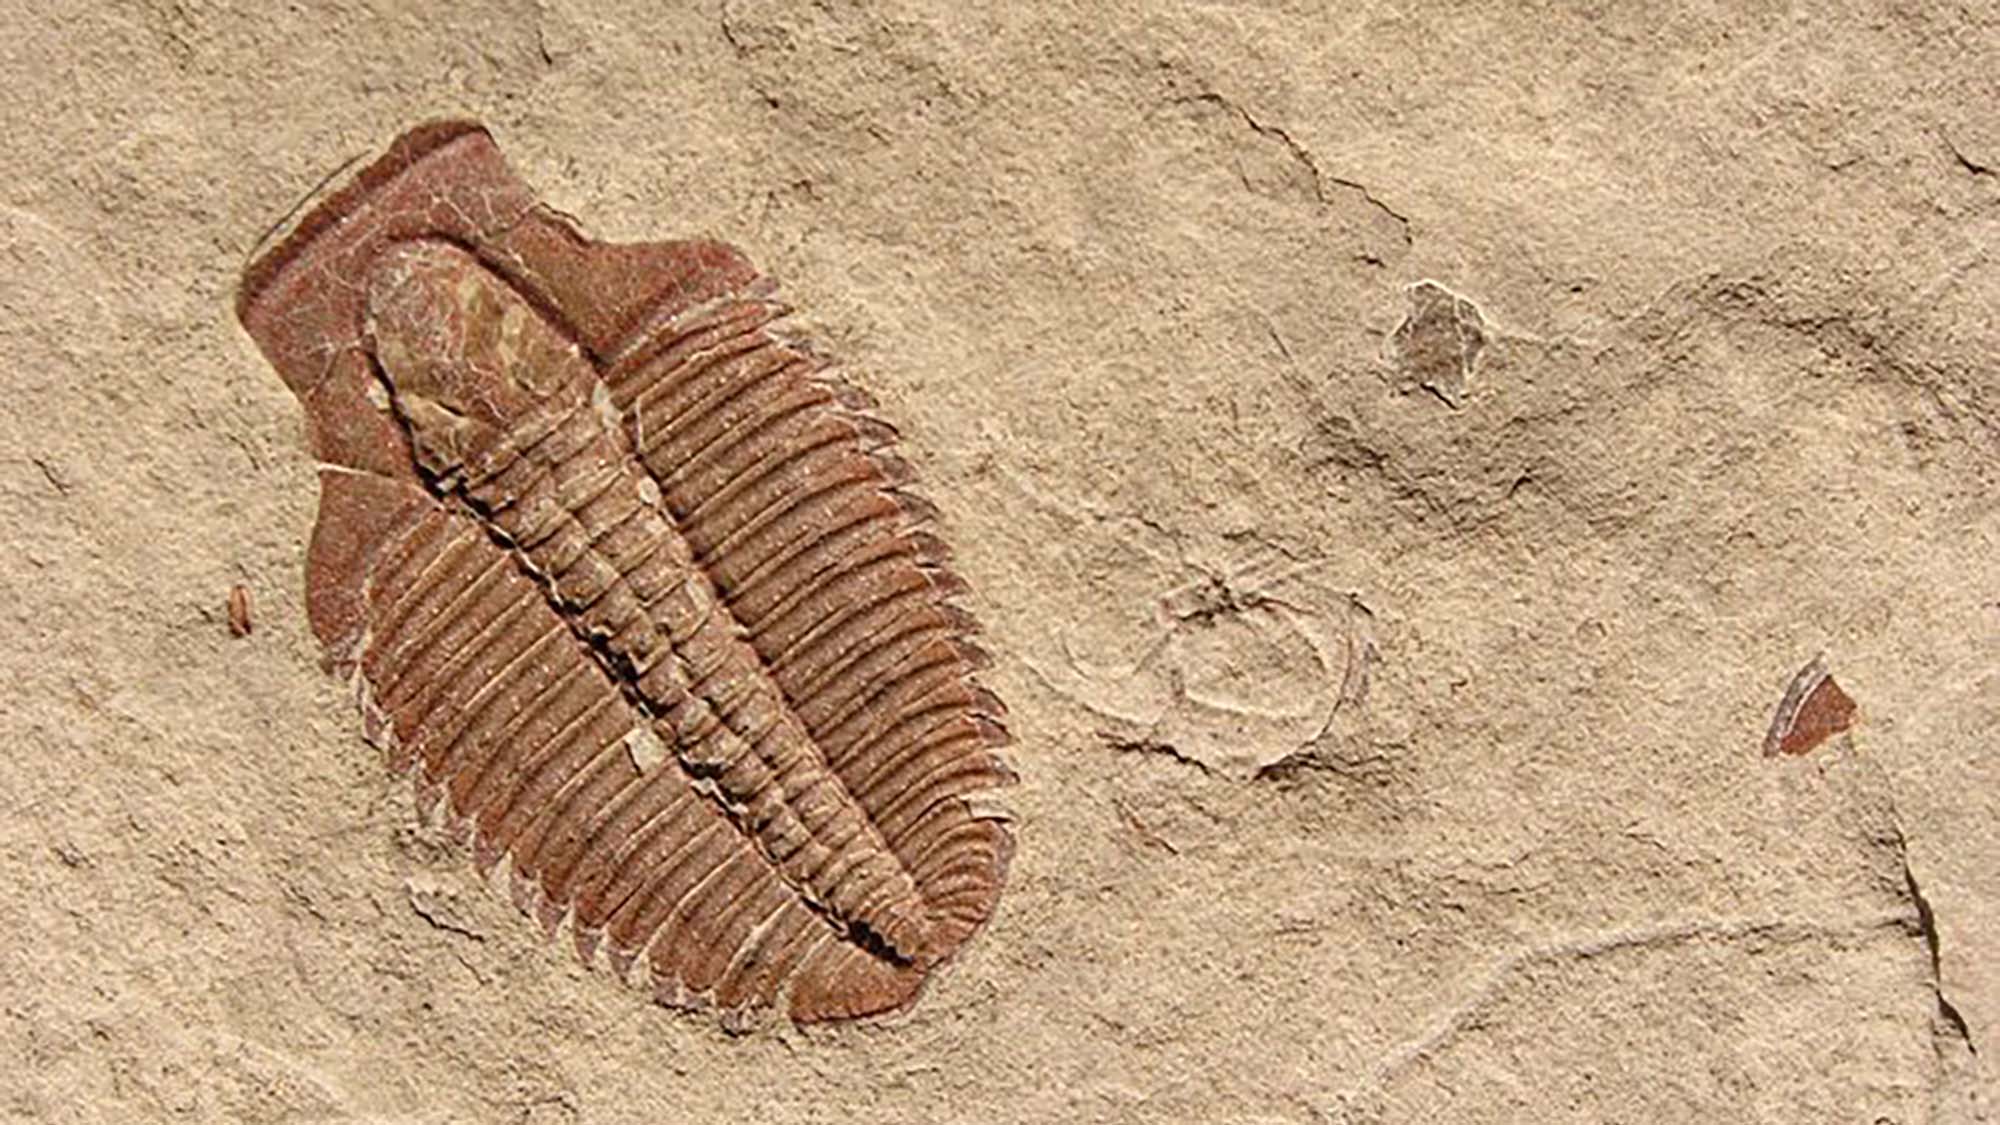 Fosil trilobit tercetak pada batuan sedimen